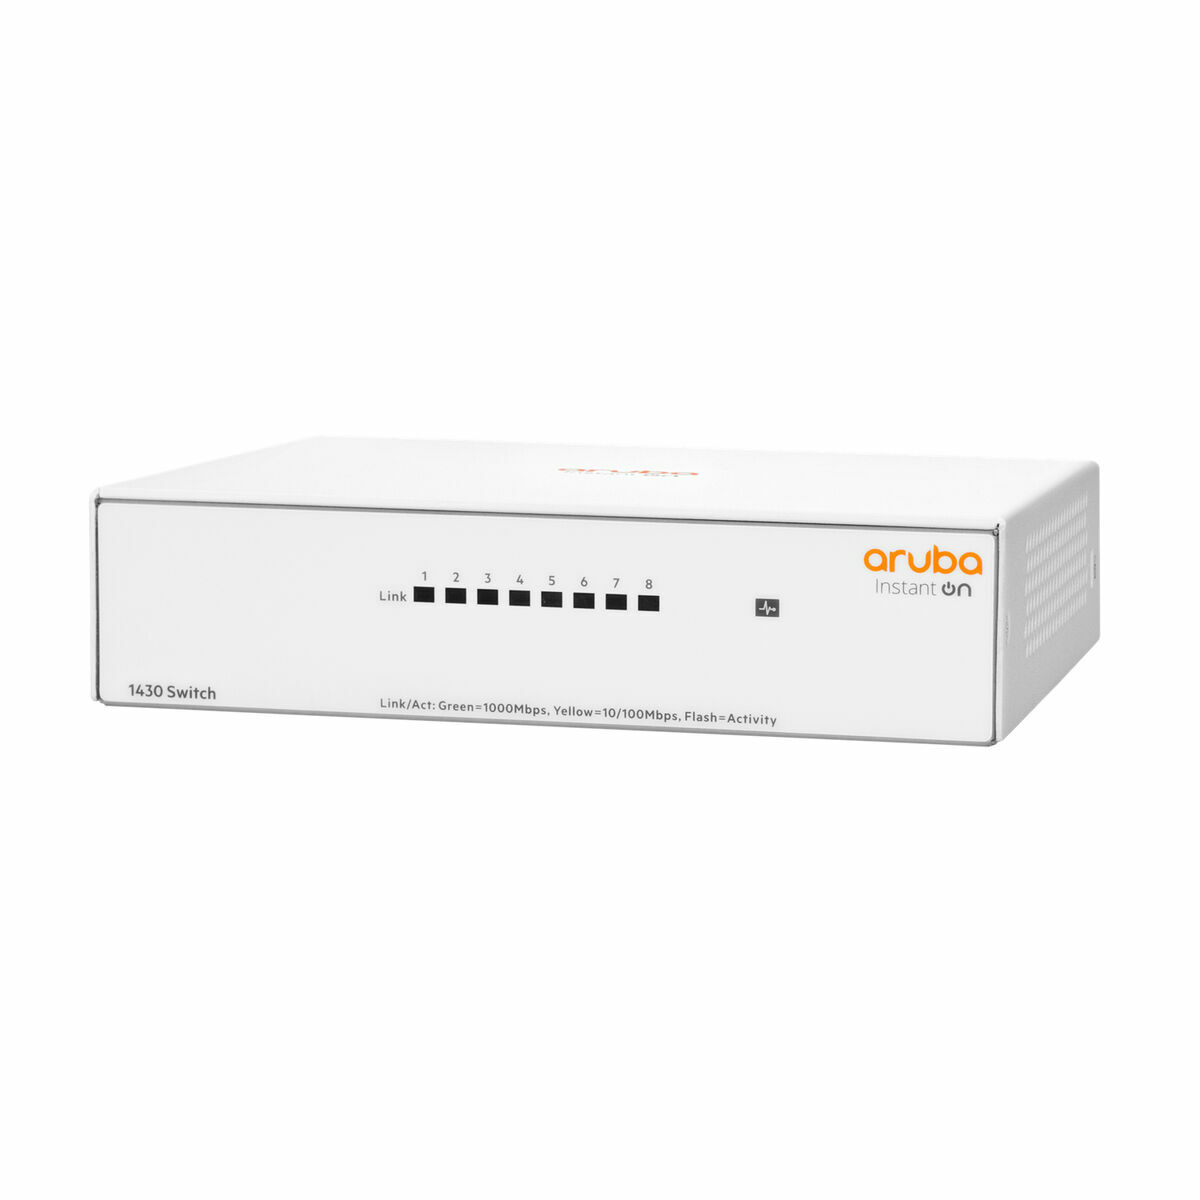 Aruba Instant On HPE 8G 1430 Switch